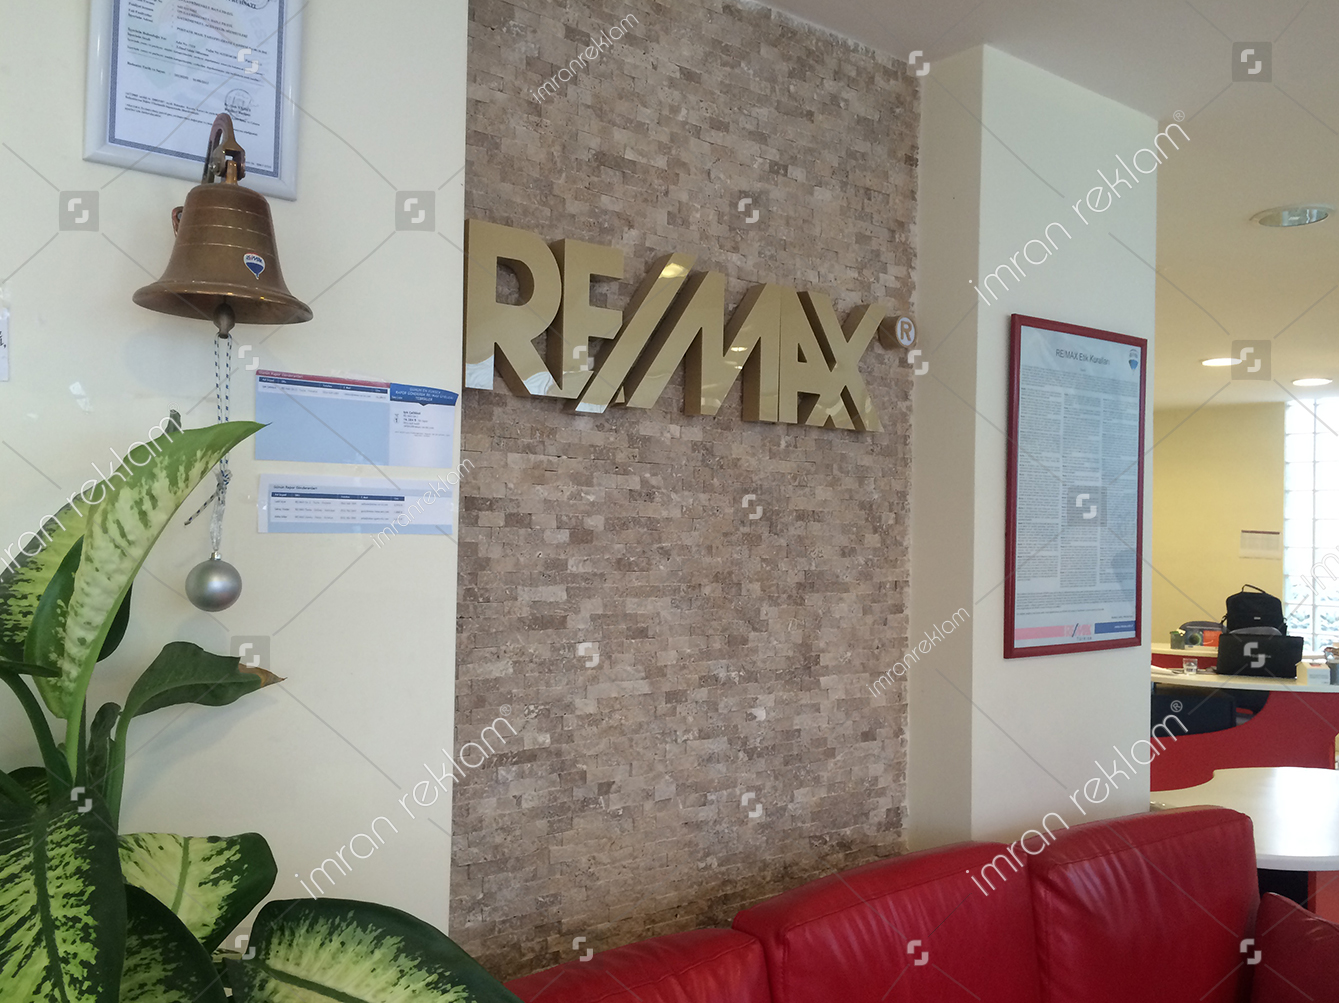 Remax banko tabelası